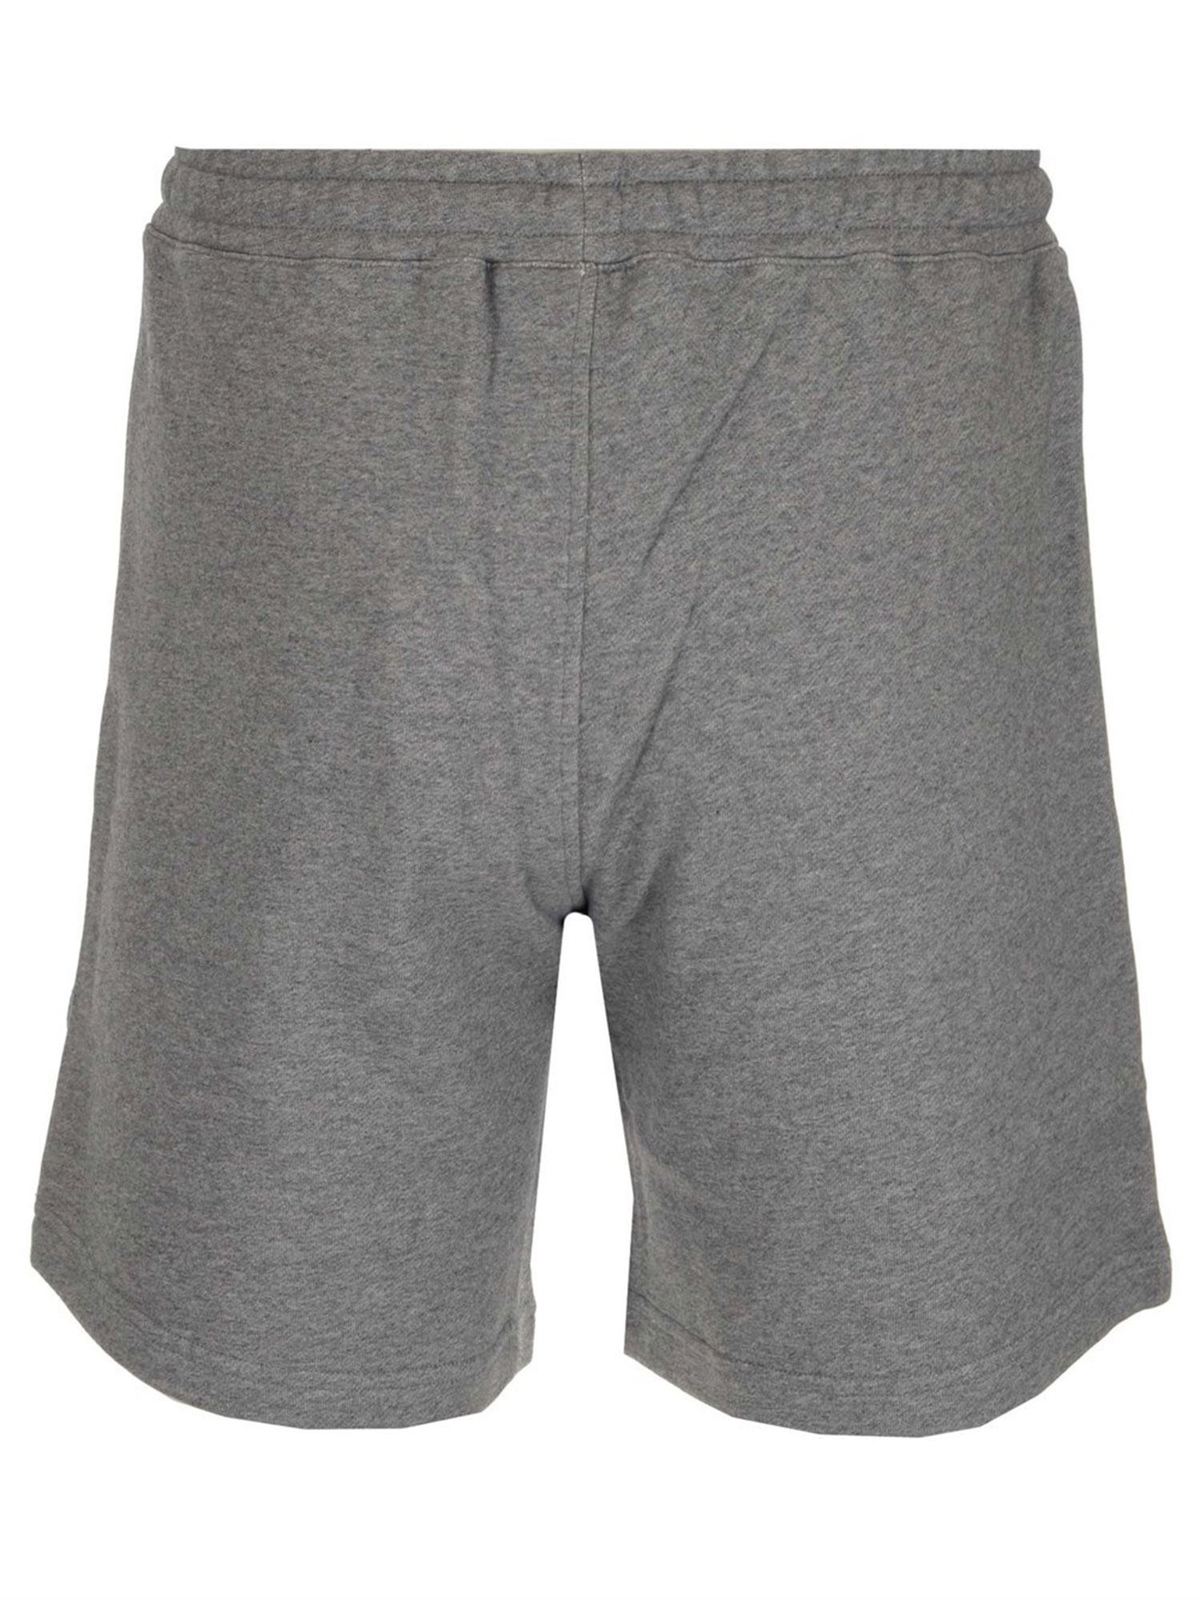 kenzo shorts grey